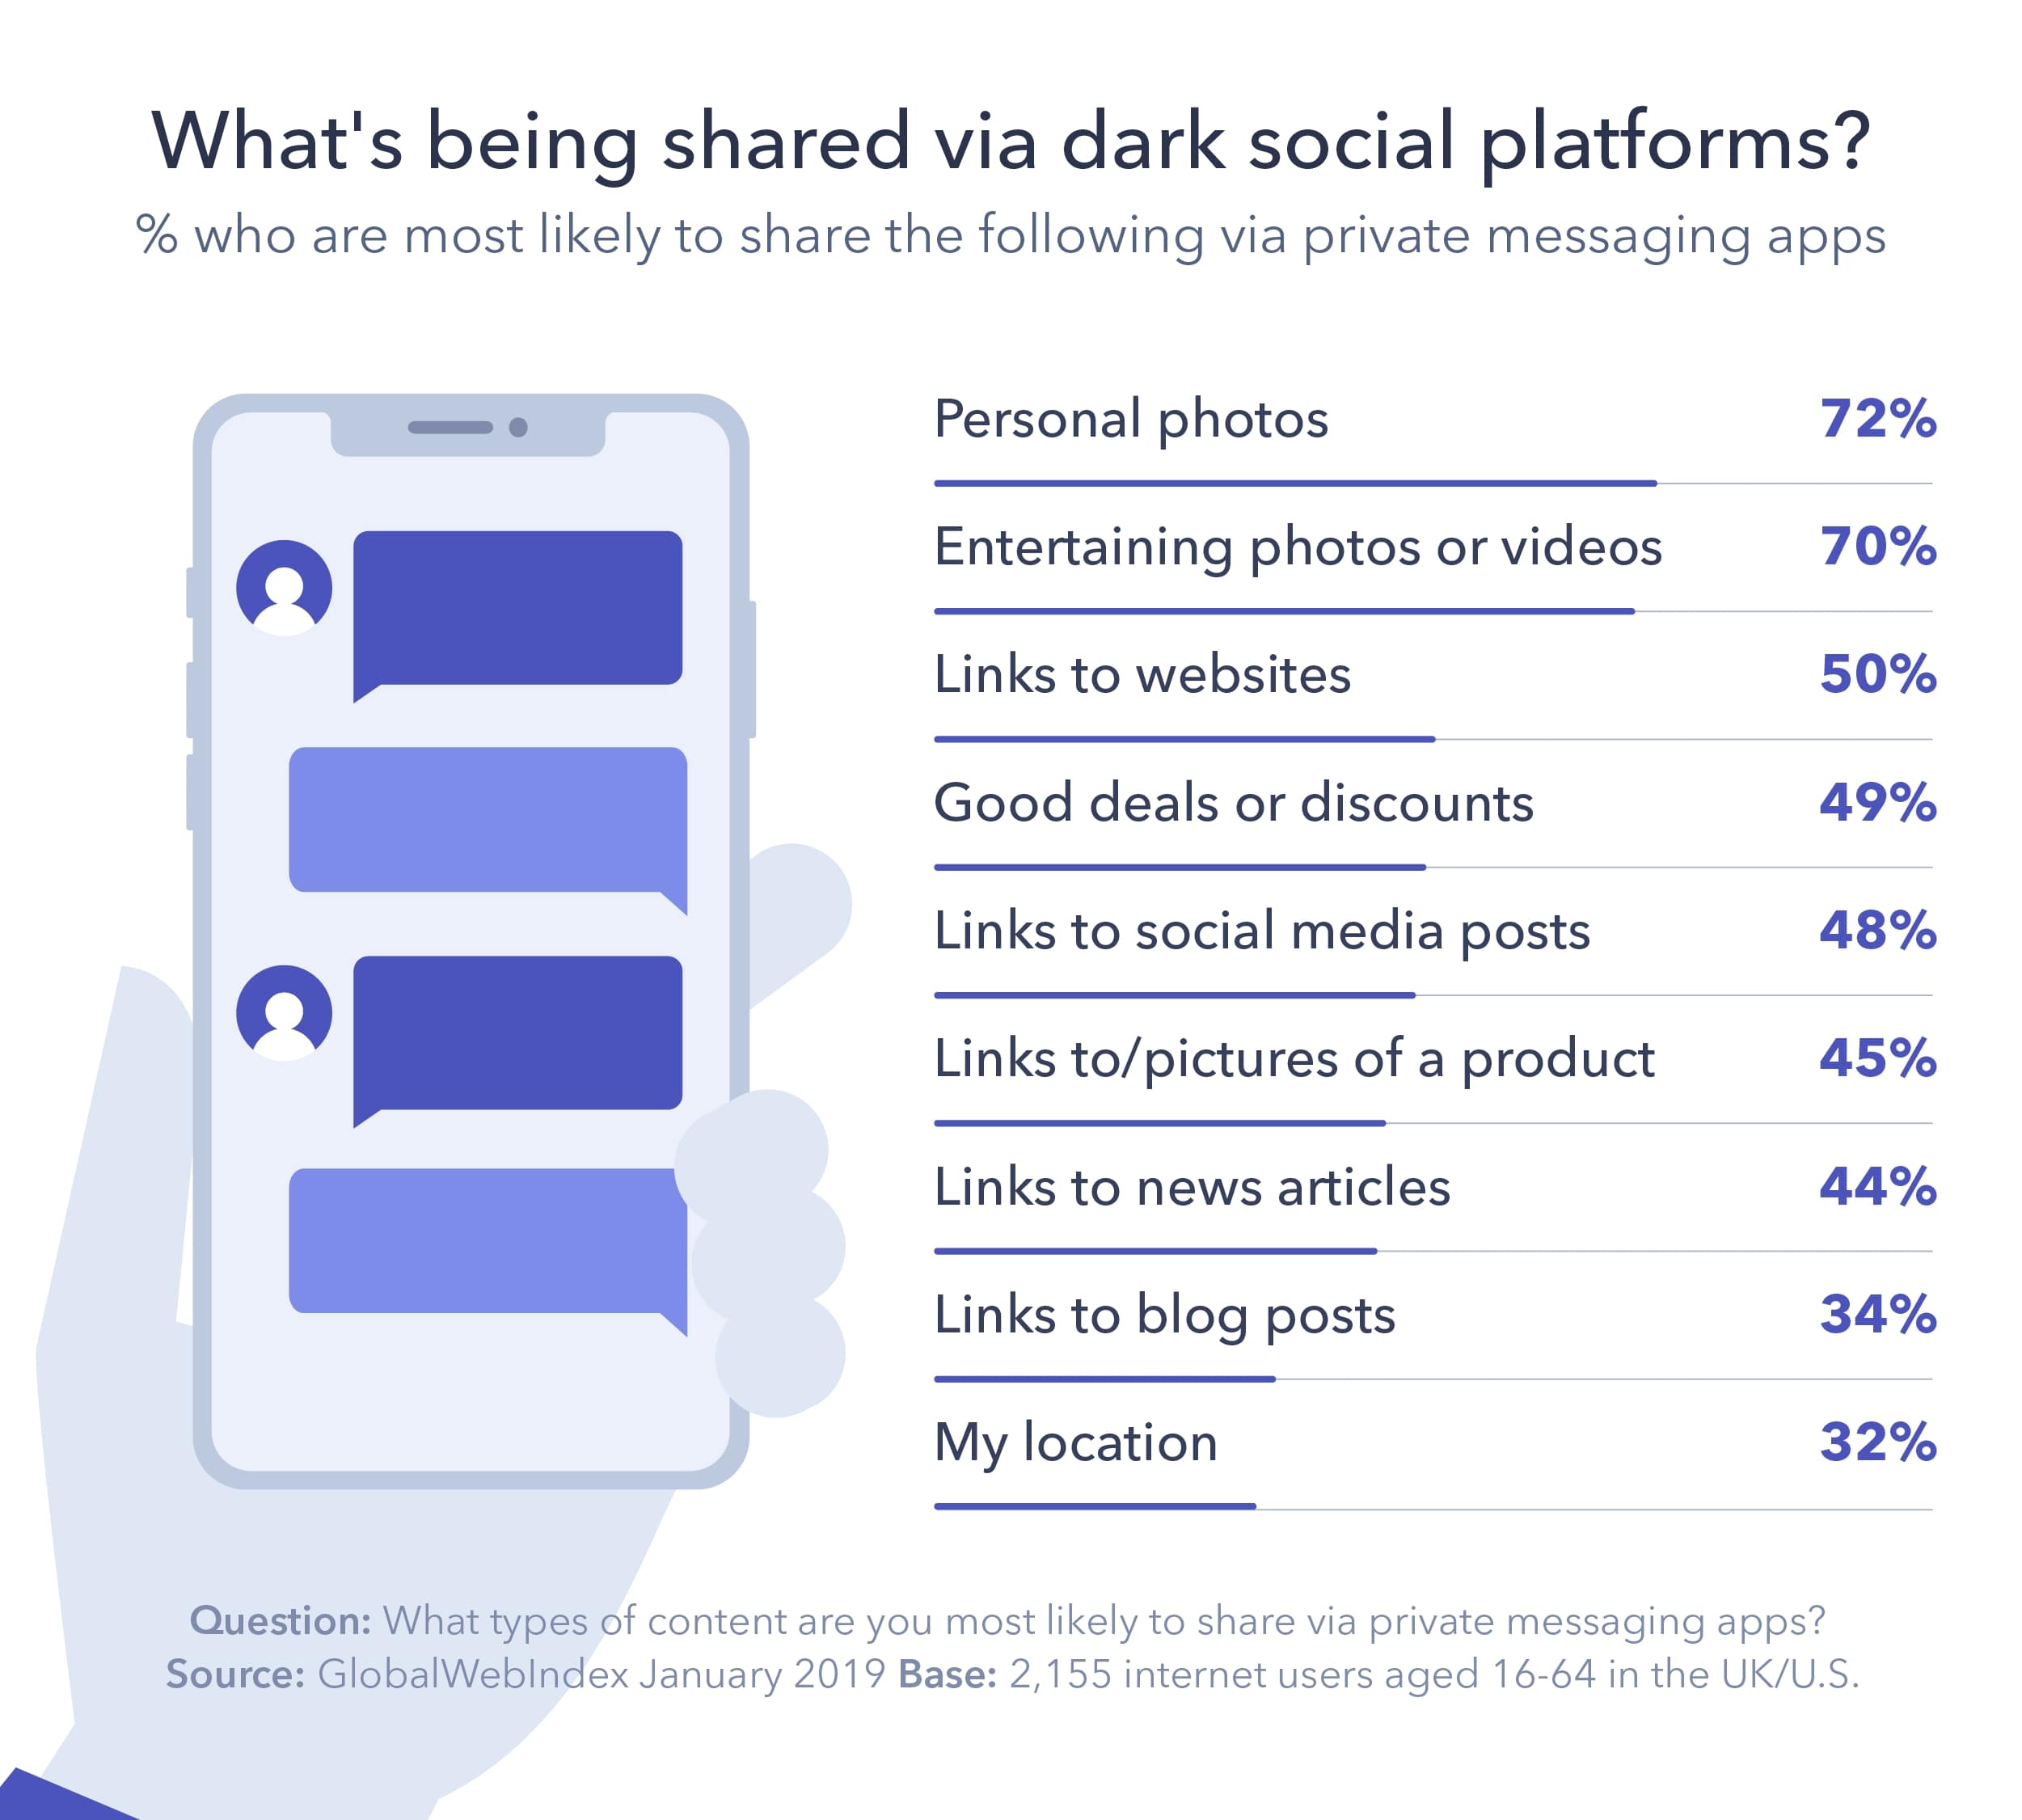 Les types de contenus partagés via le dark social